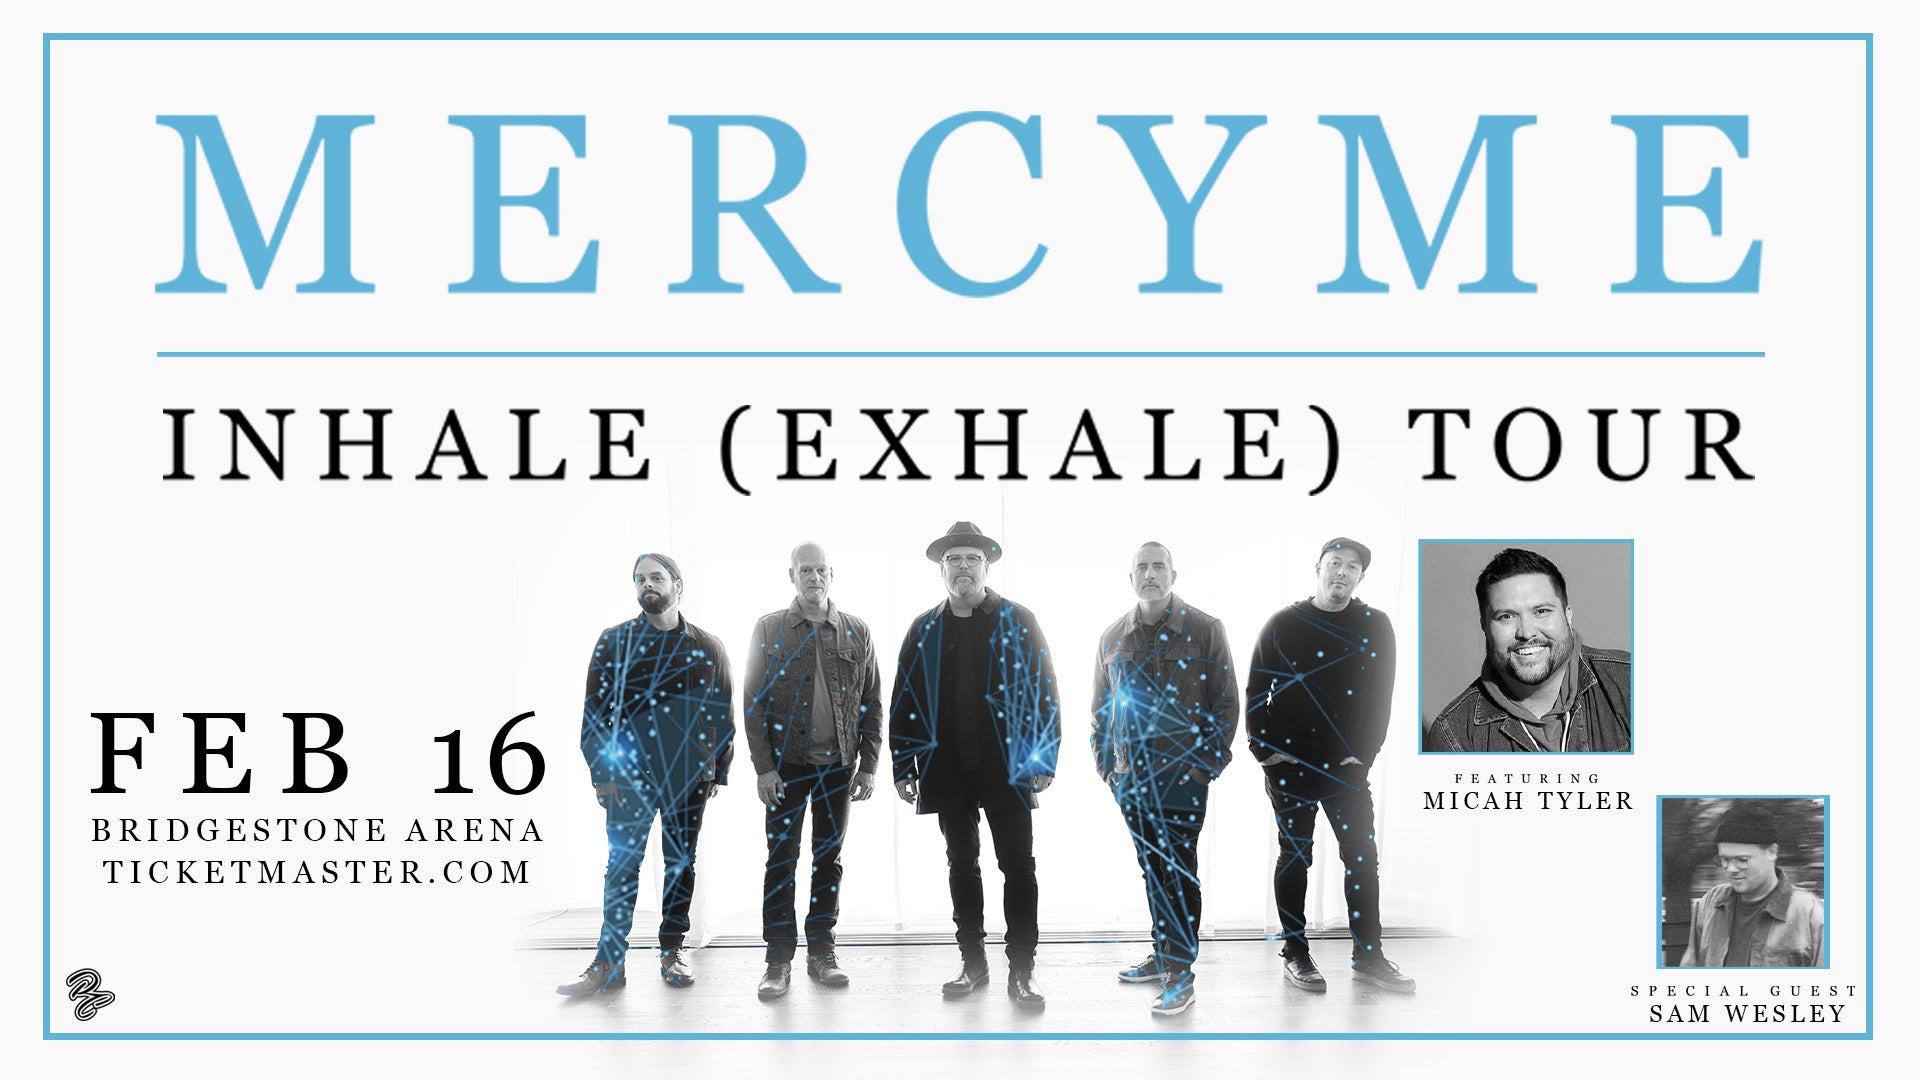 MercyMe inhale (exhale) tour